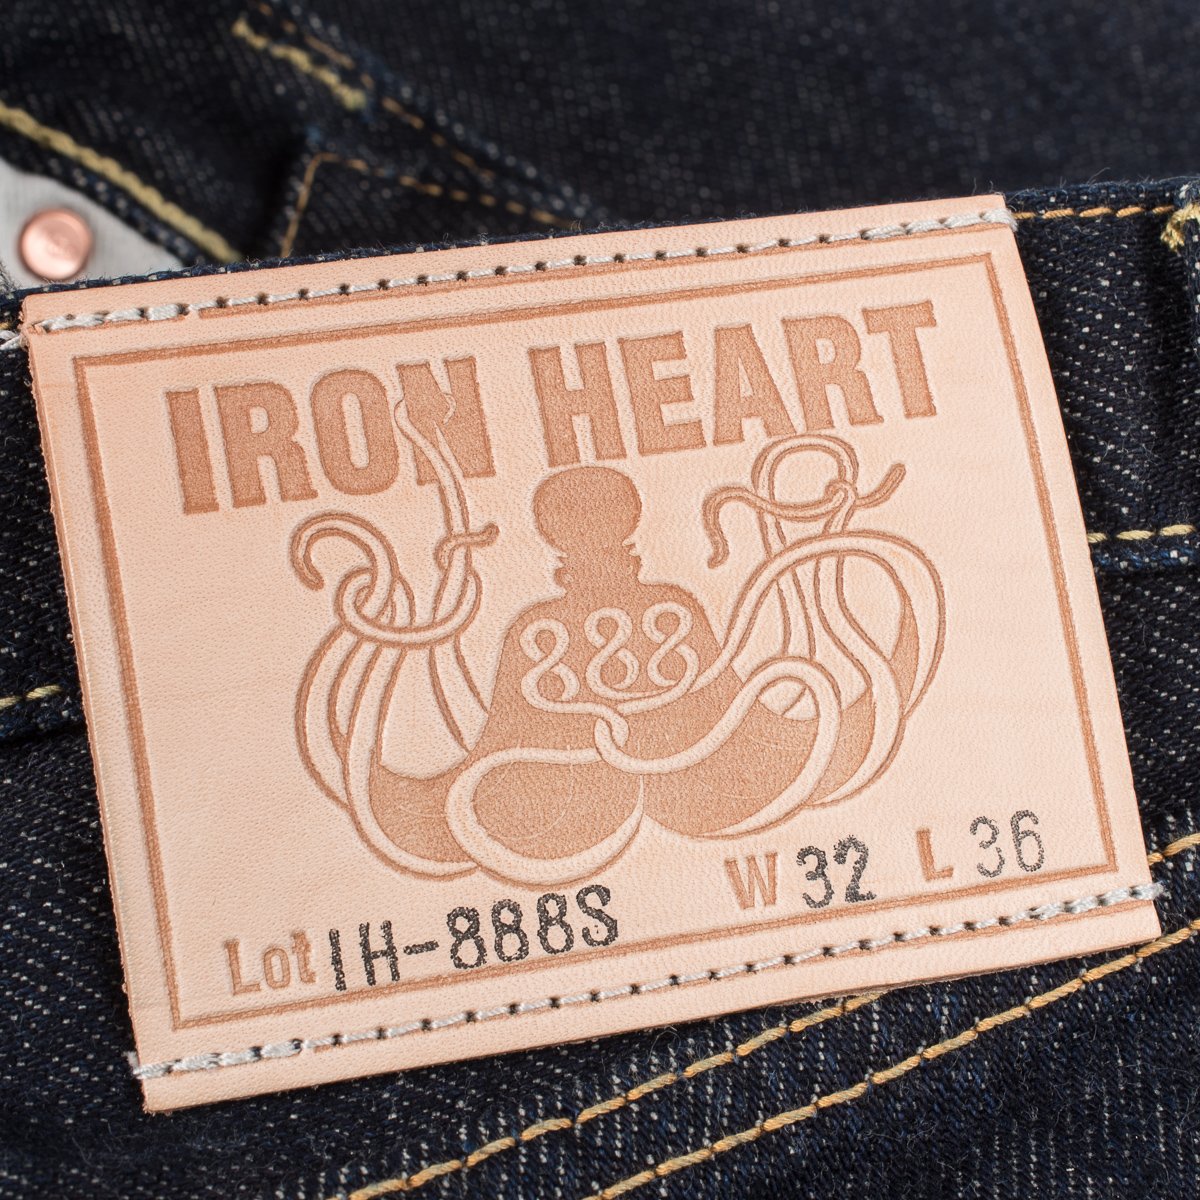 Iron Heart IH-888S-21 Indigo 21oz. Selvedge Denim - Tapered Cut - Franklin & Poe